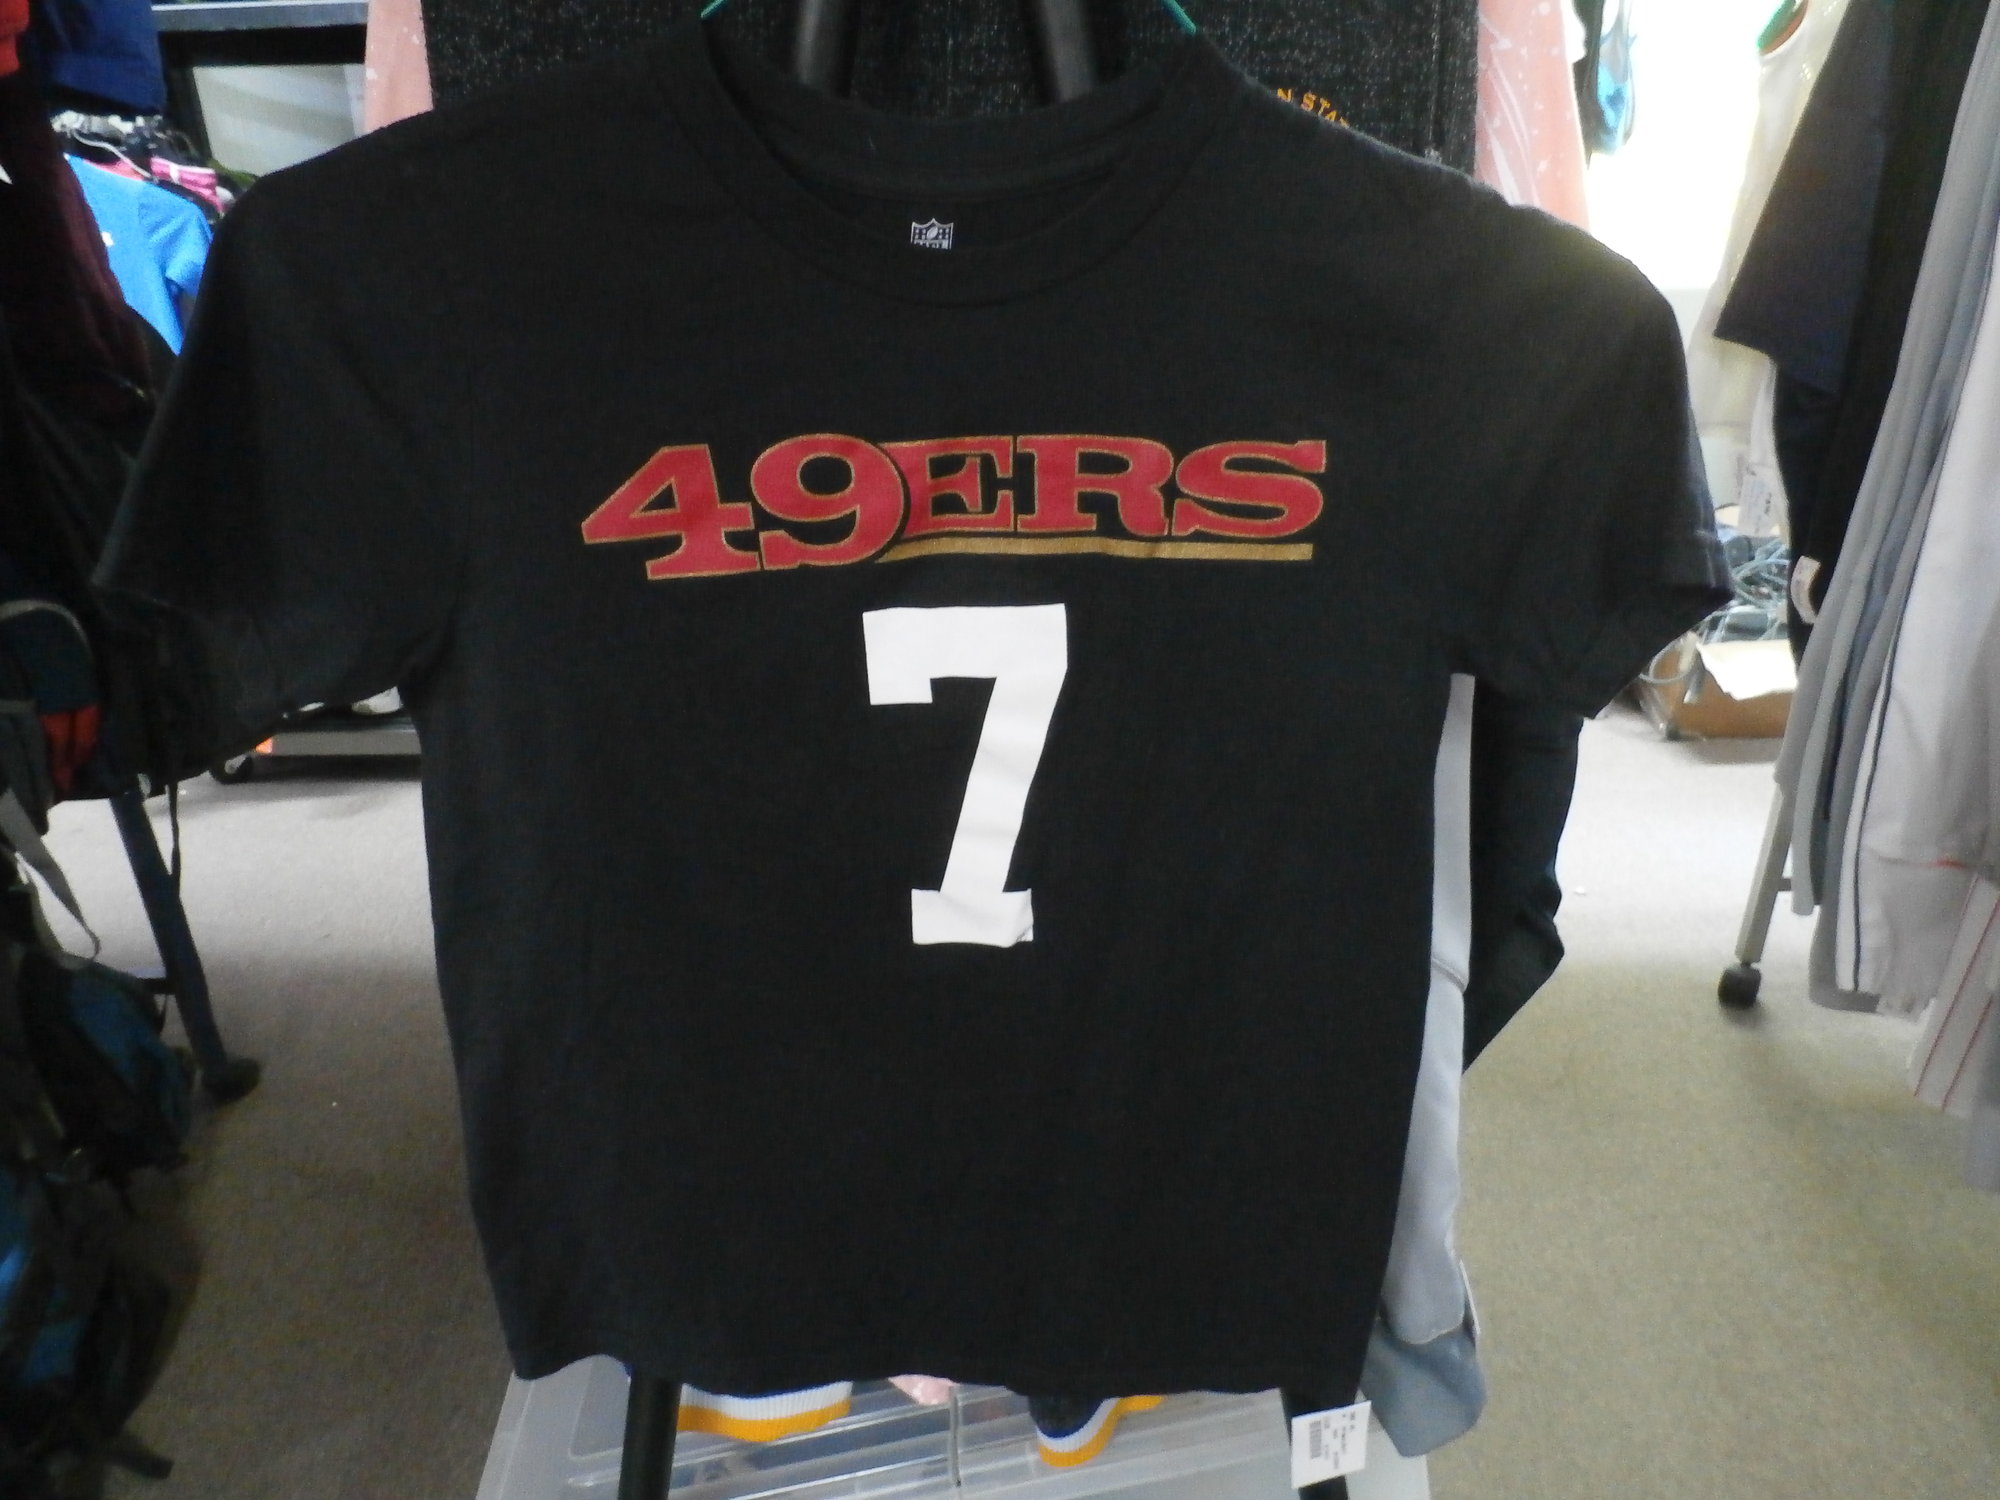 49ers player shirts